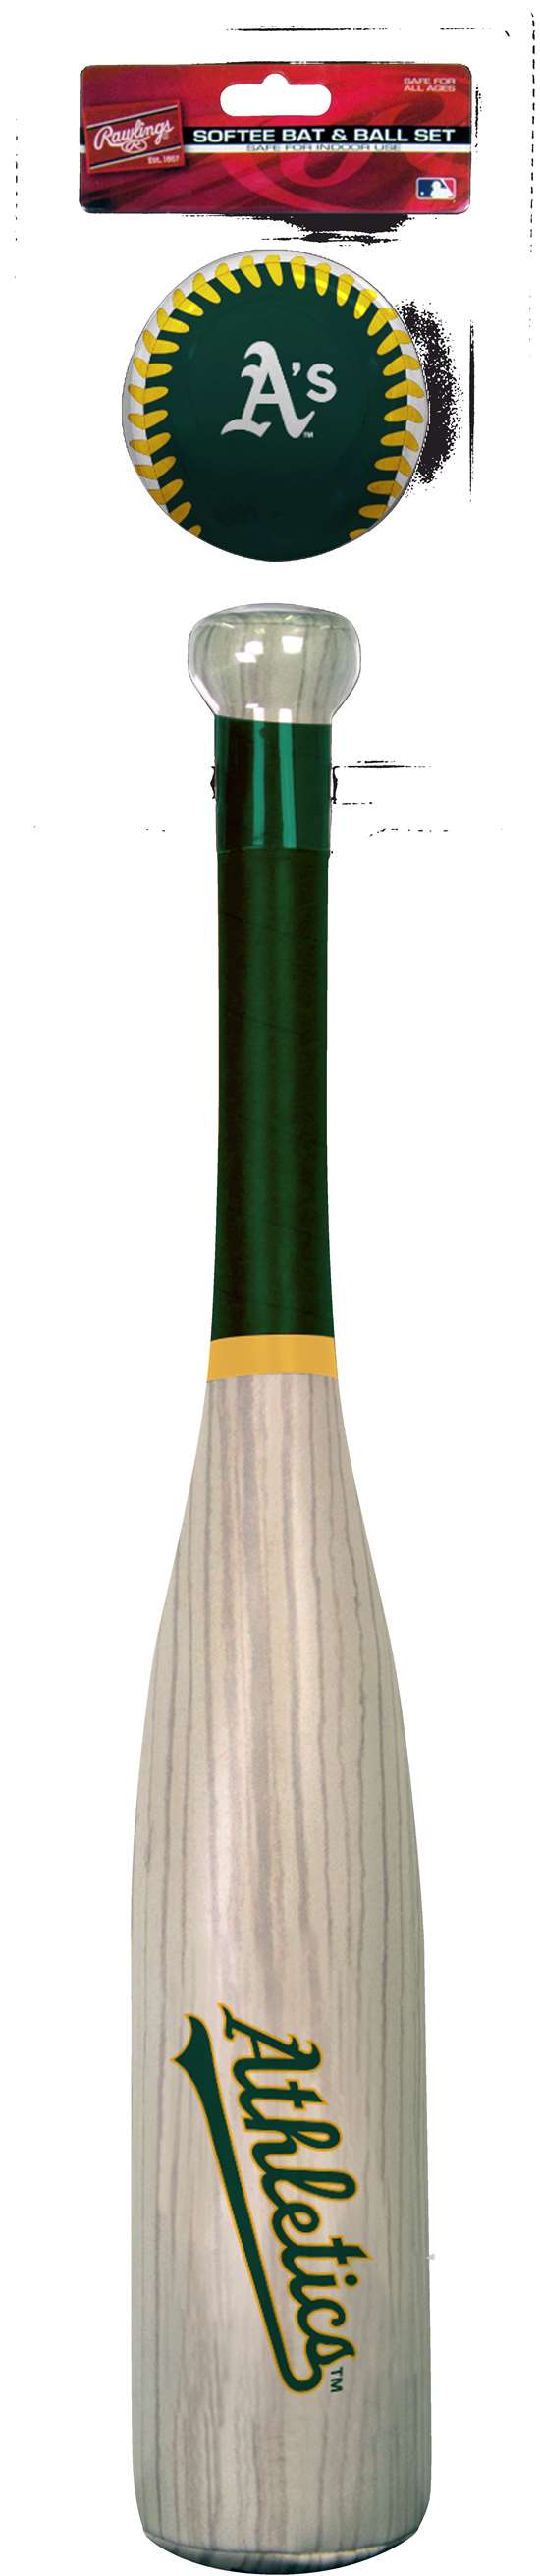 MLB Oakland Athletics Grand Slam Softee Baseball Bat and Ball Set (Wood Grain)